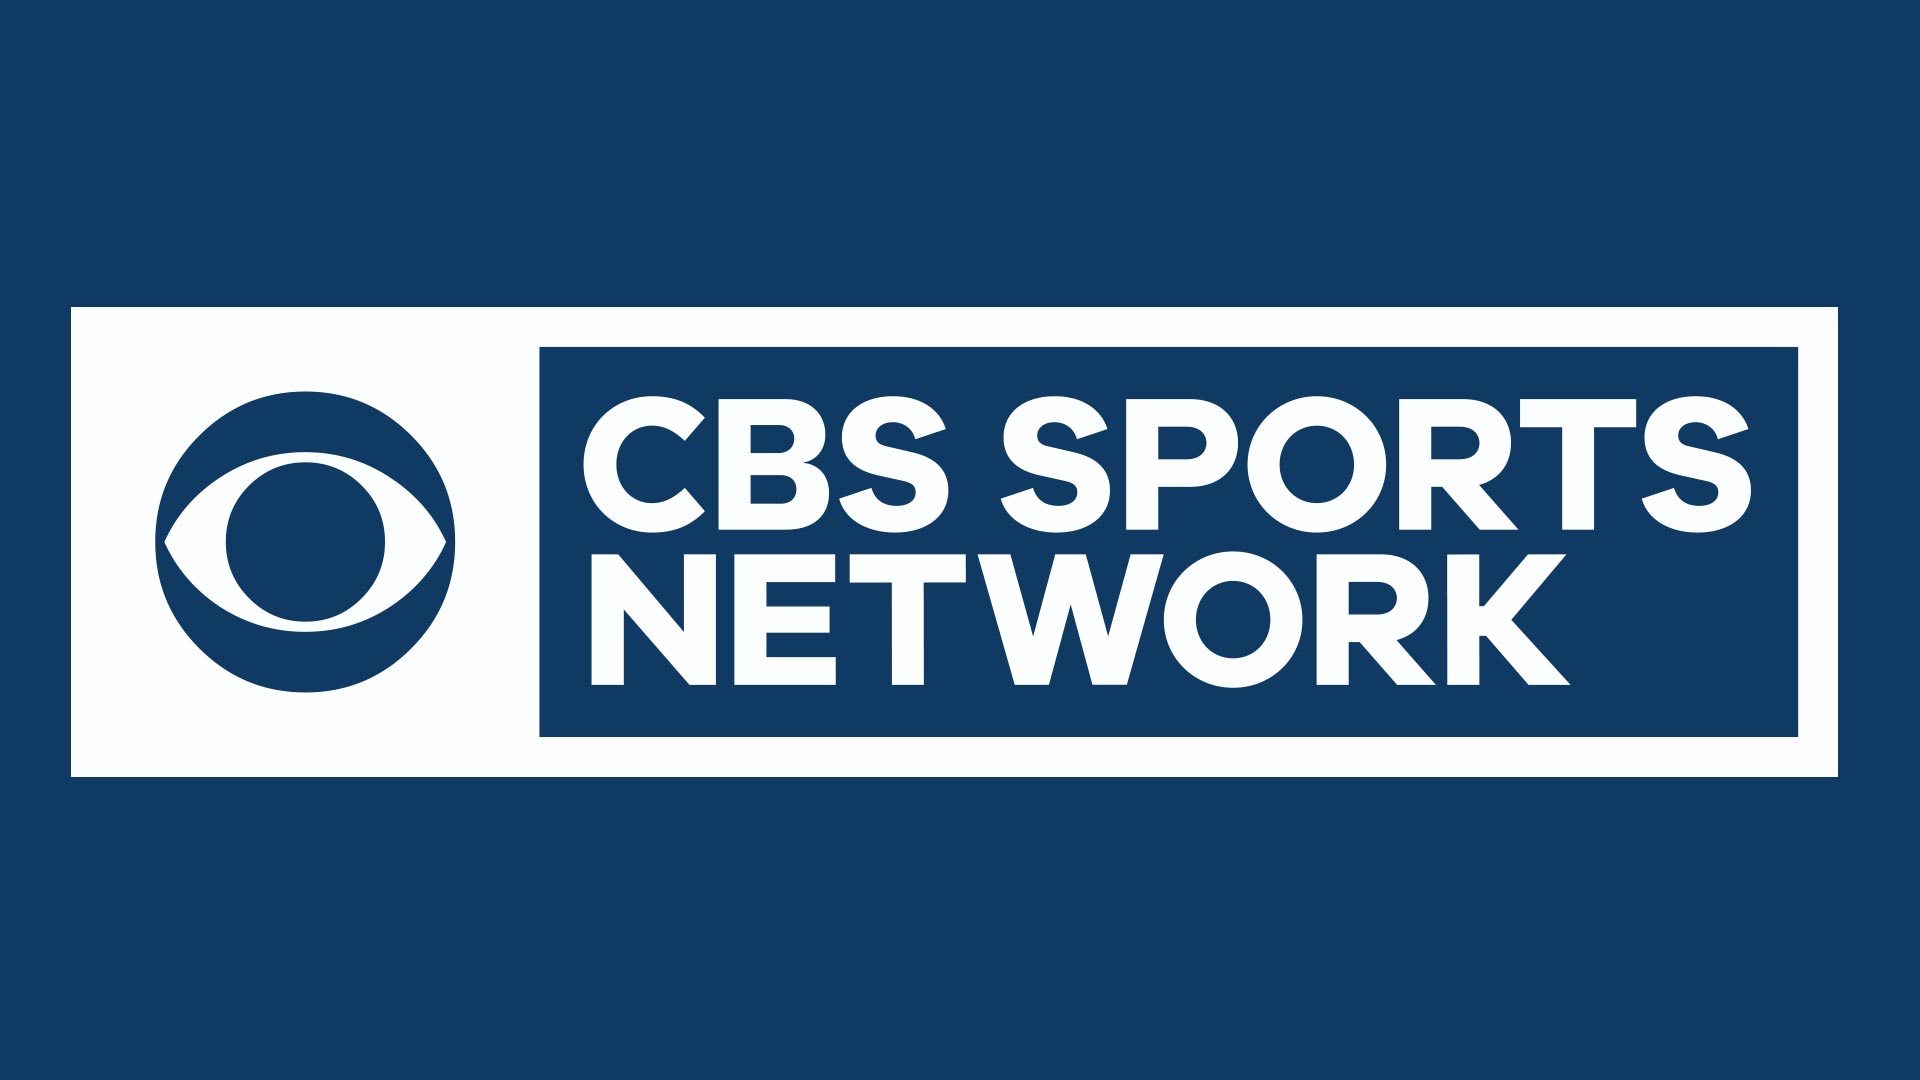 Cbs Sports Work Announces Mvc Slate Salukis To Make Two